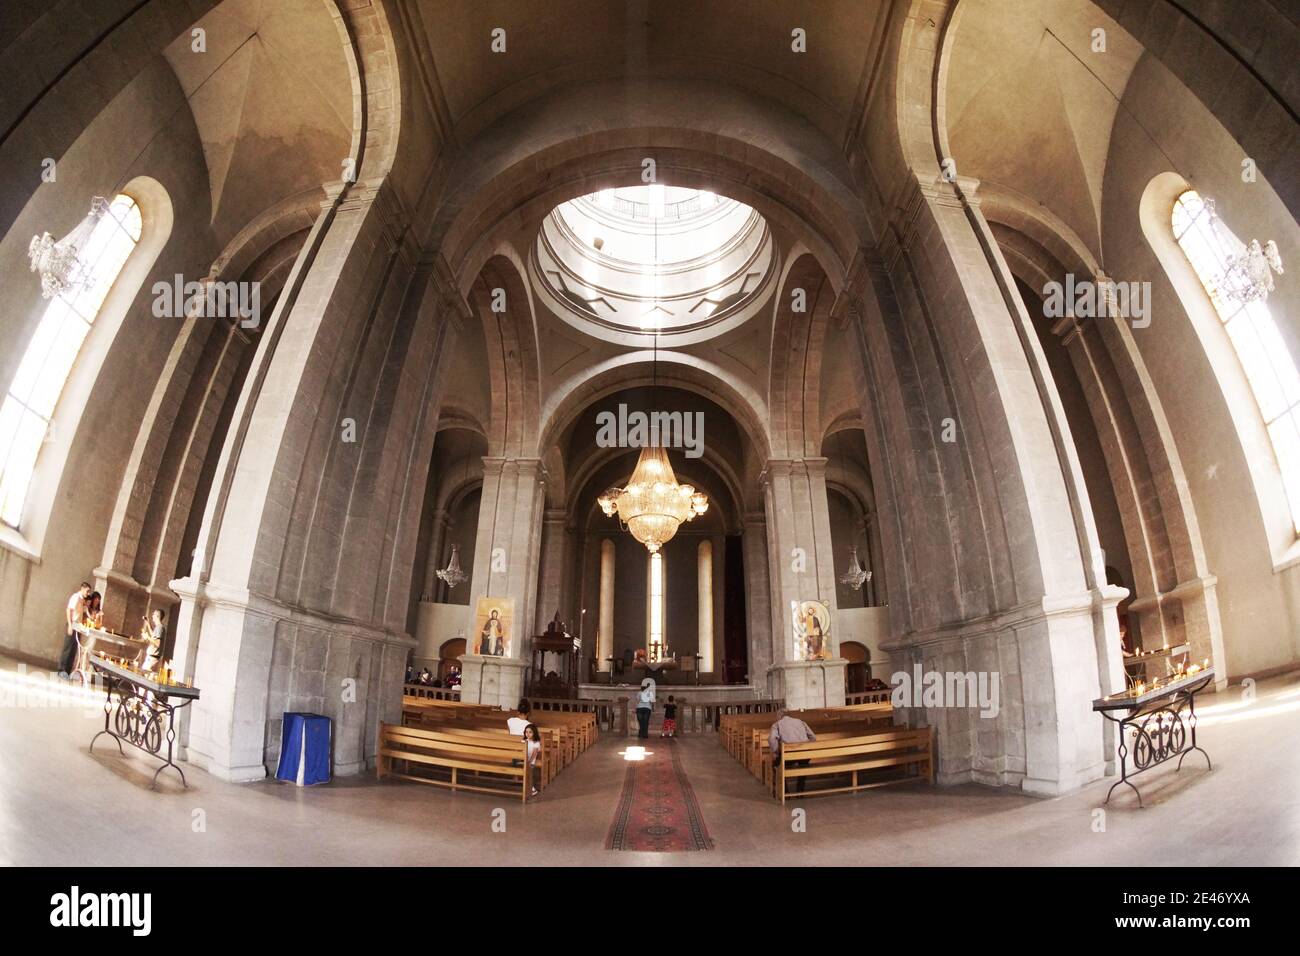 SHUSHI, ARMENIA - Jul 26, 2015: Inside Ghazanchetsots Cathedral, Shushi before Azerbaijan occupation. Stock Photo